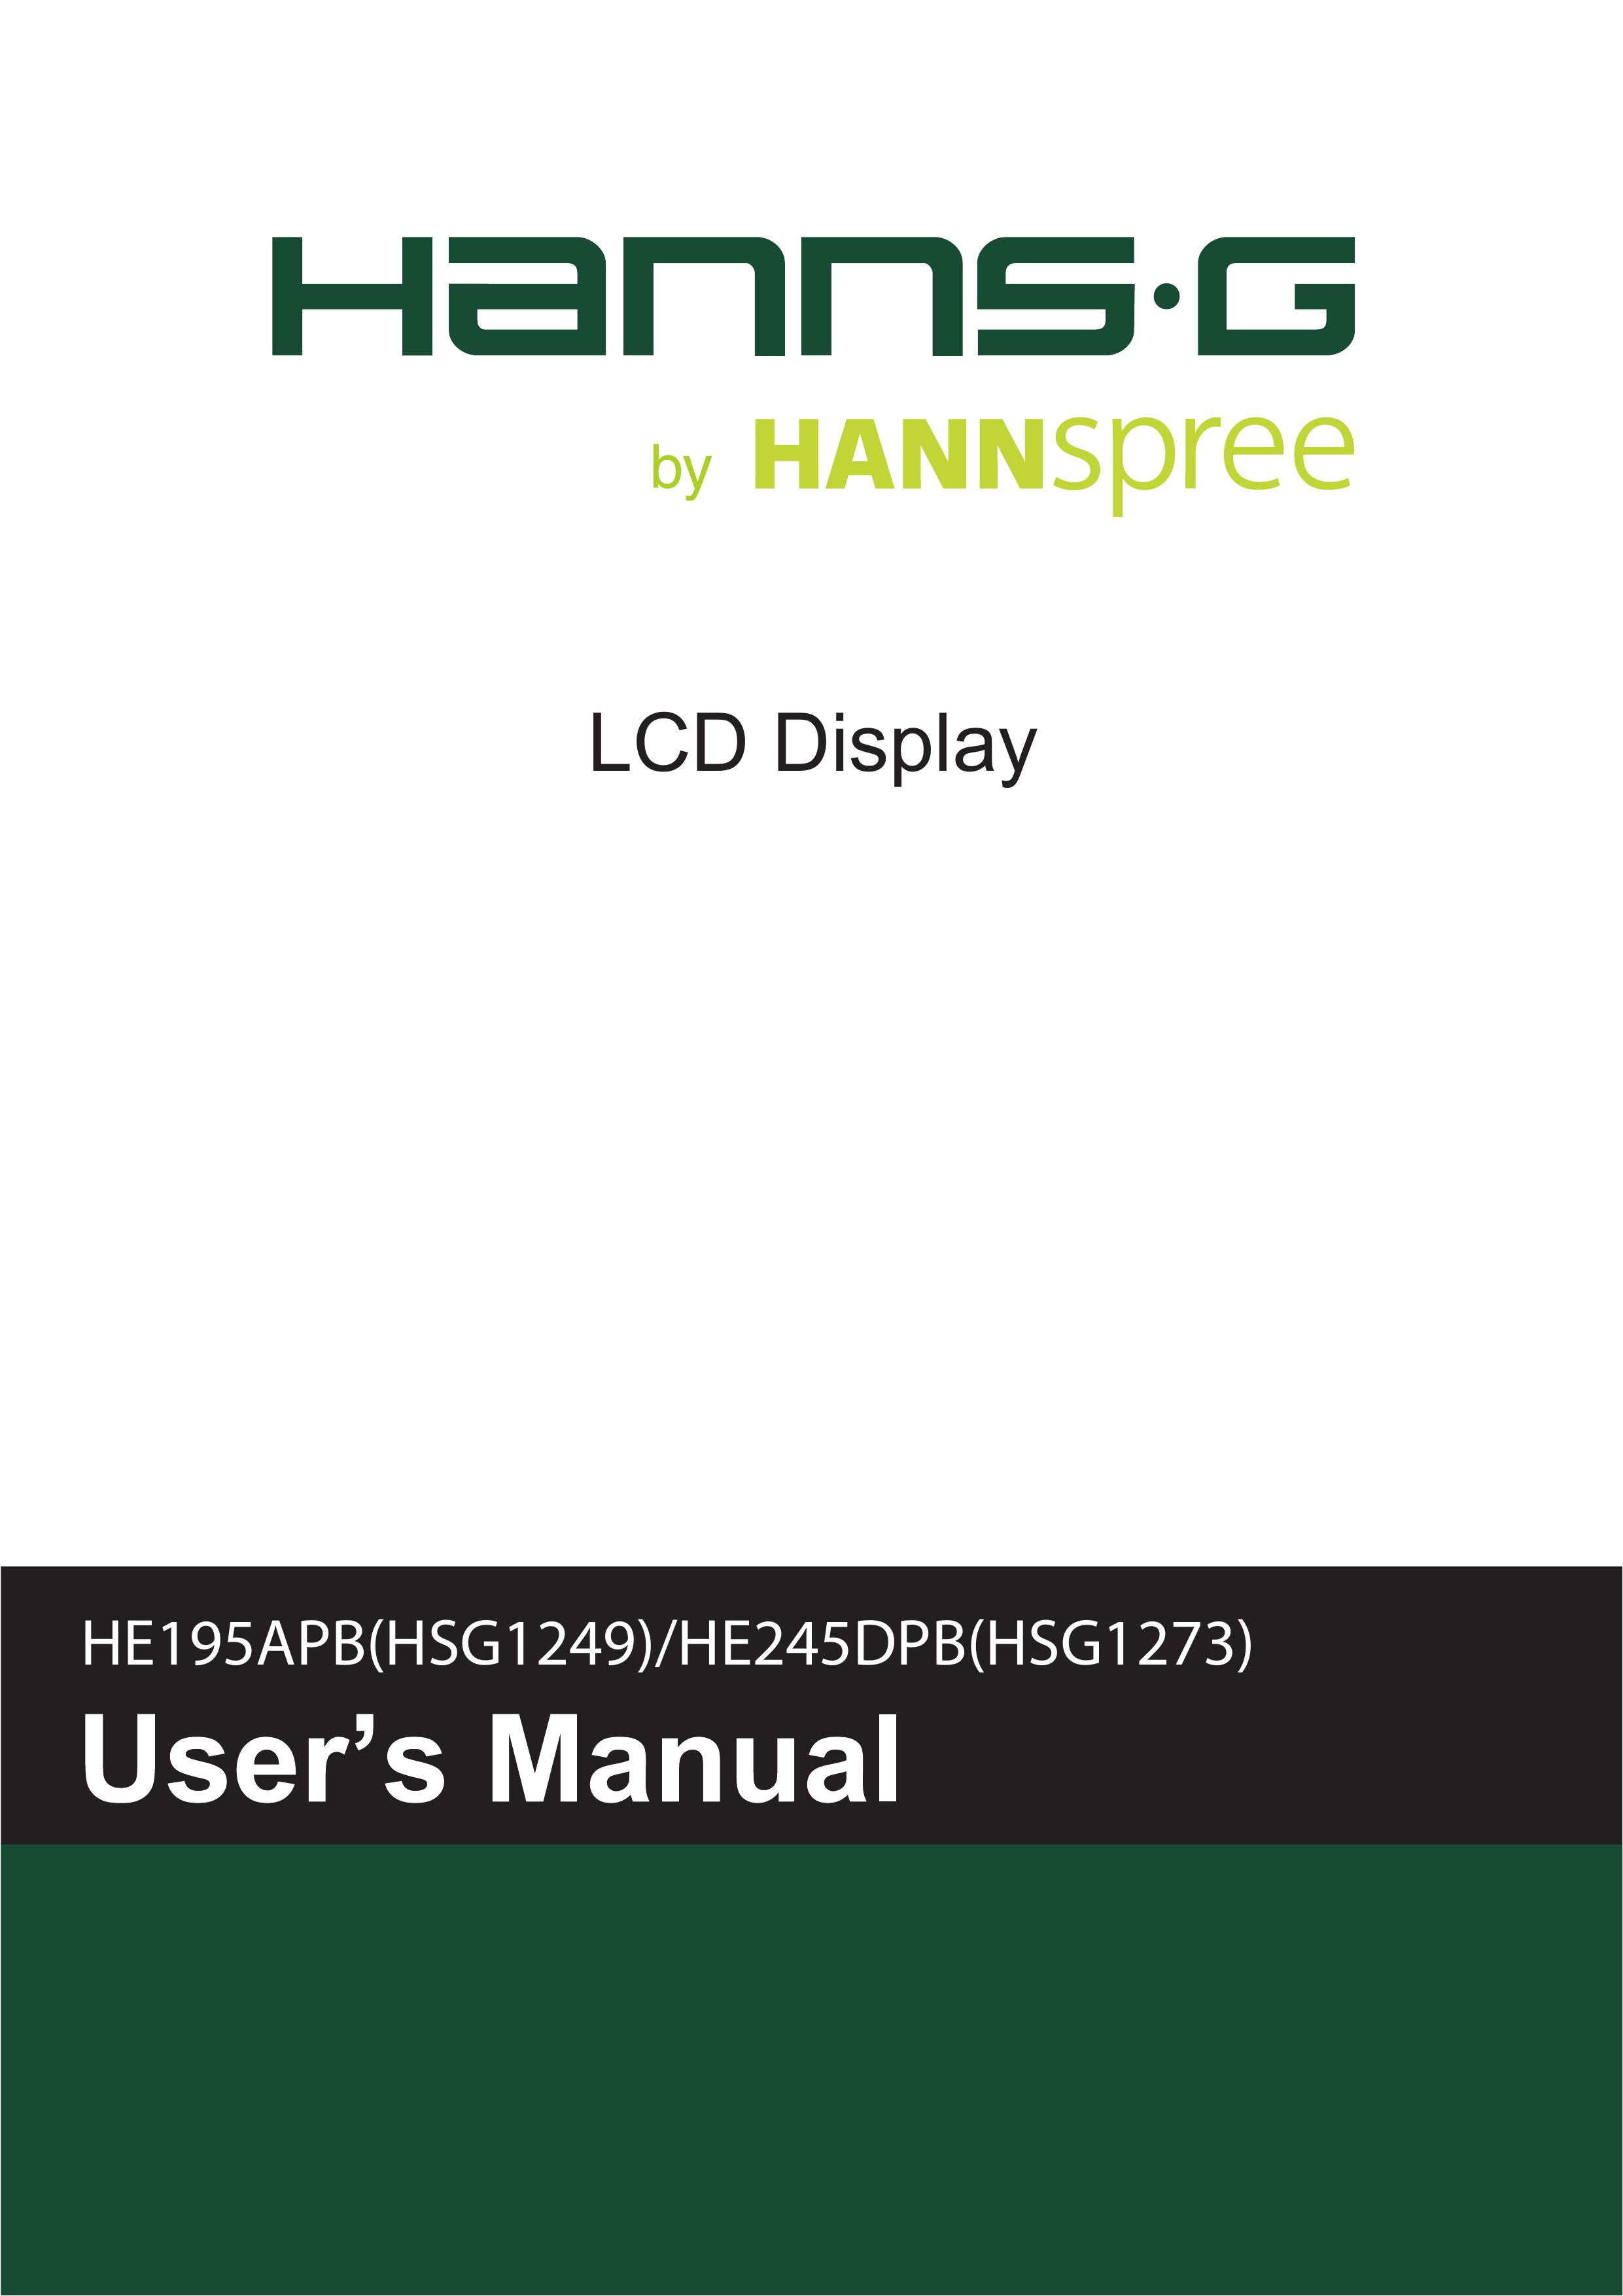 HANNspree HE245DPB(HSG1273) Digital Photo Frame User Manual